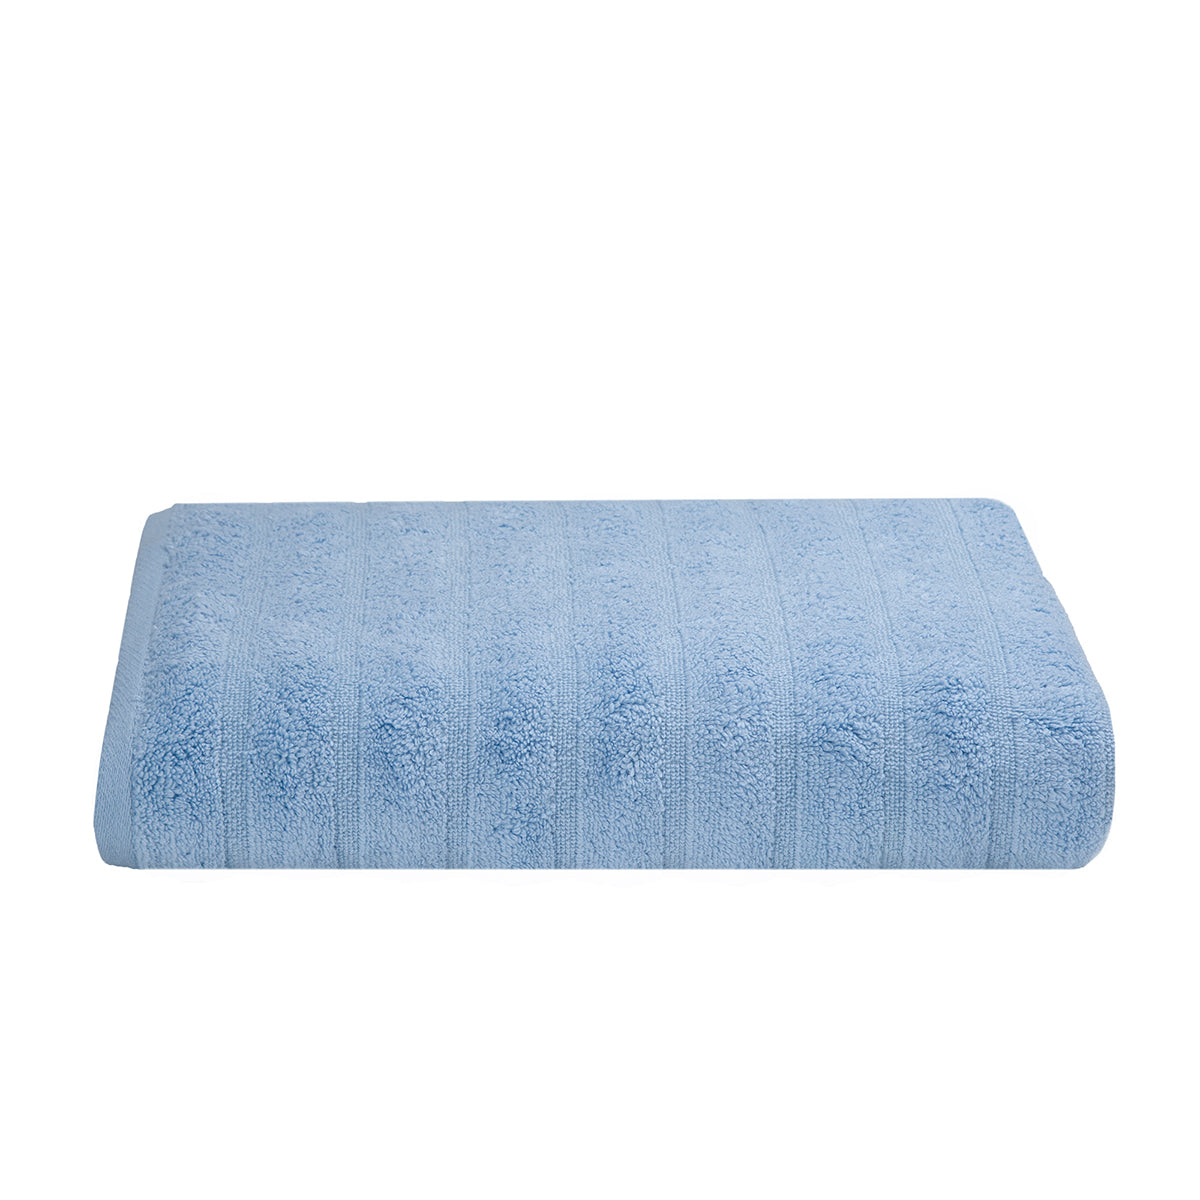 Casper Antimicrobial Antifungal Super Absorbent Lofty Baby Blue Towel